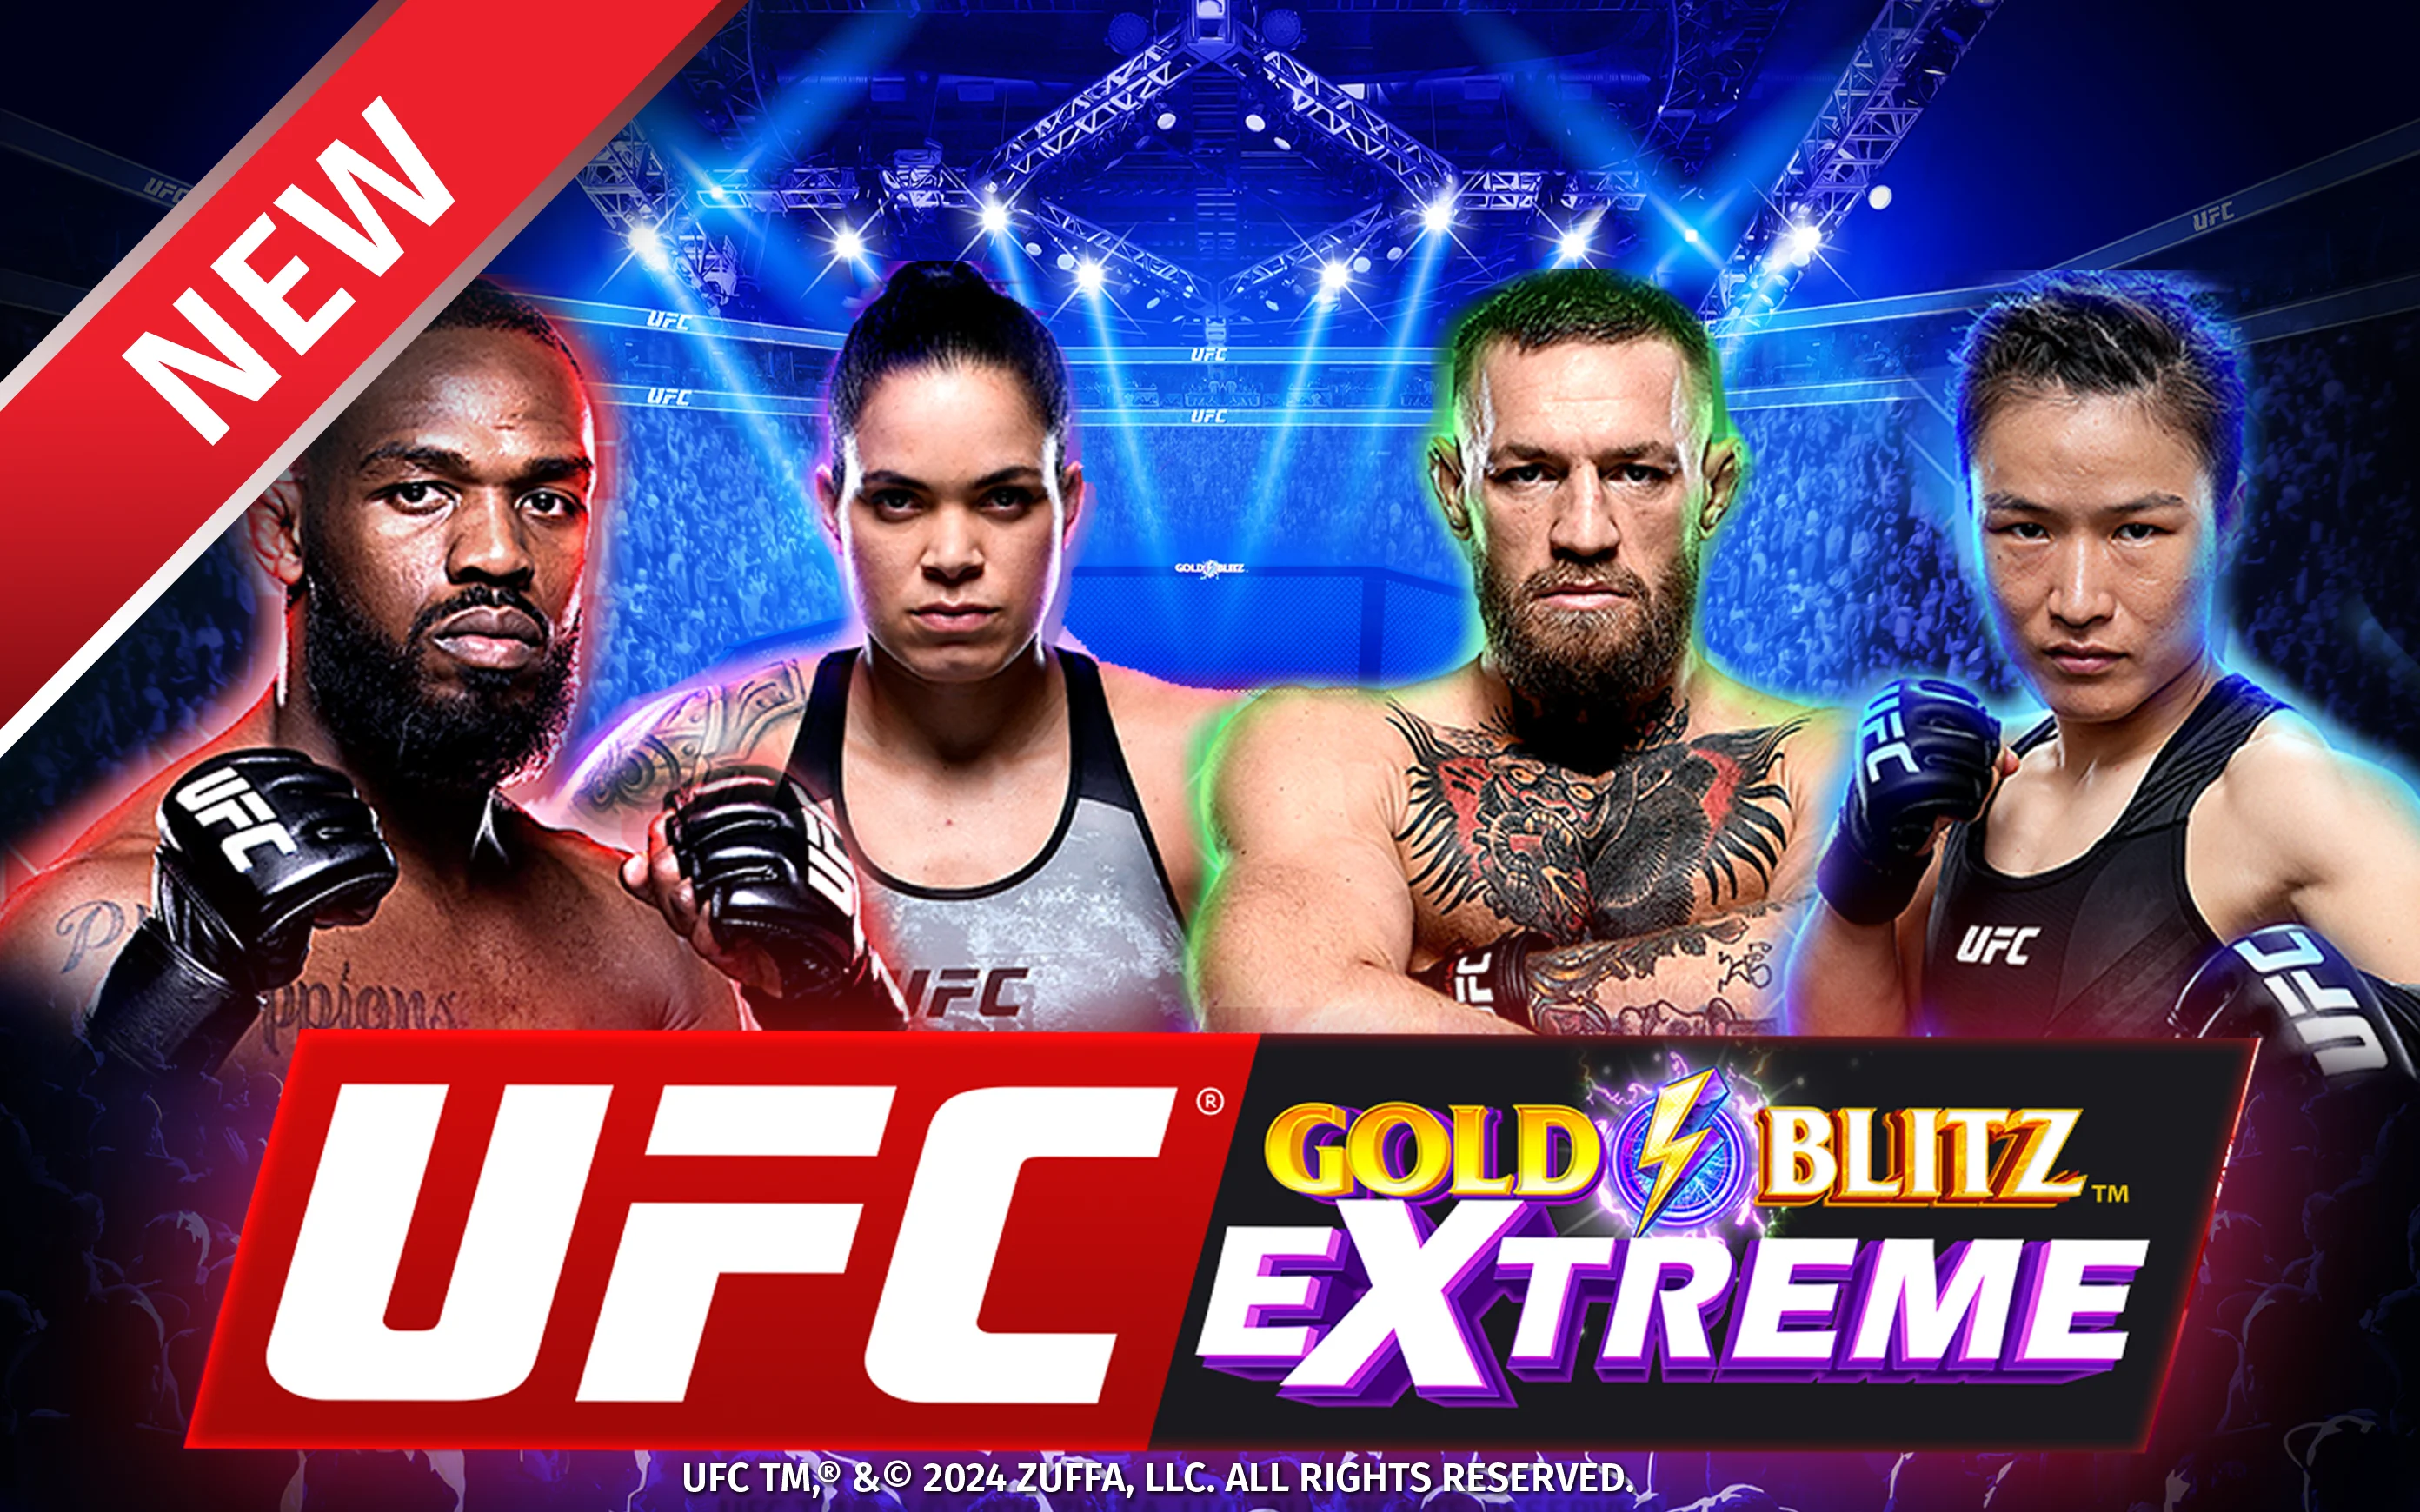 Play UFC Gold Blitz Extreme™ on Starcasino.be online casino